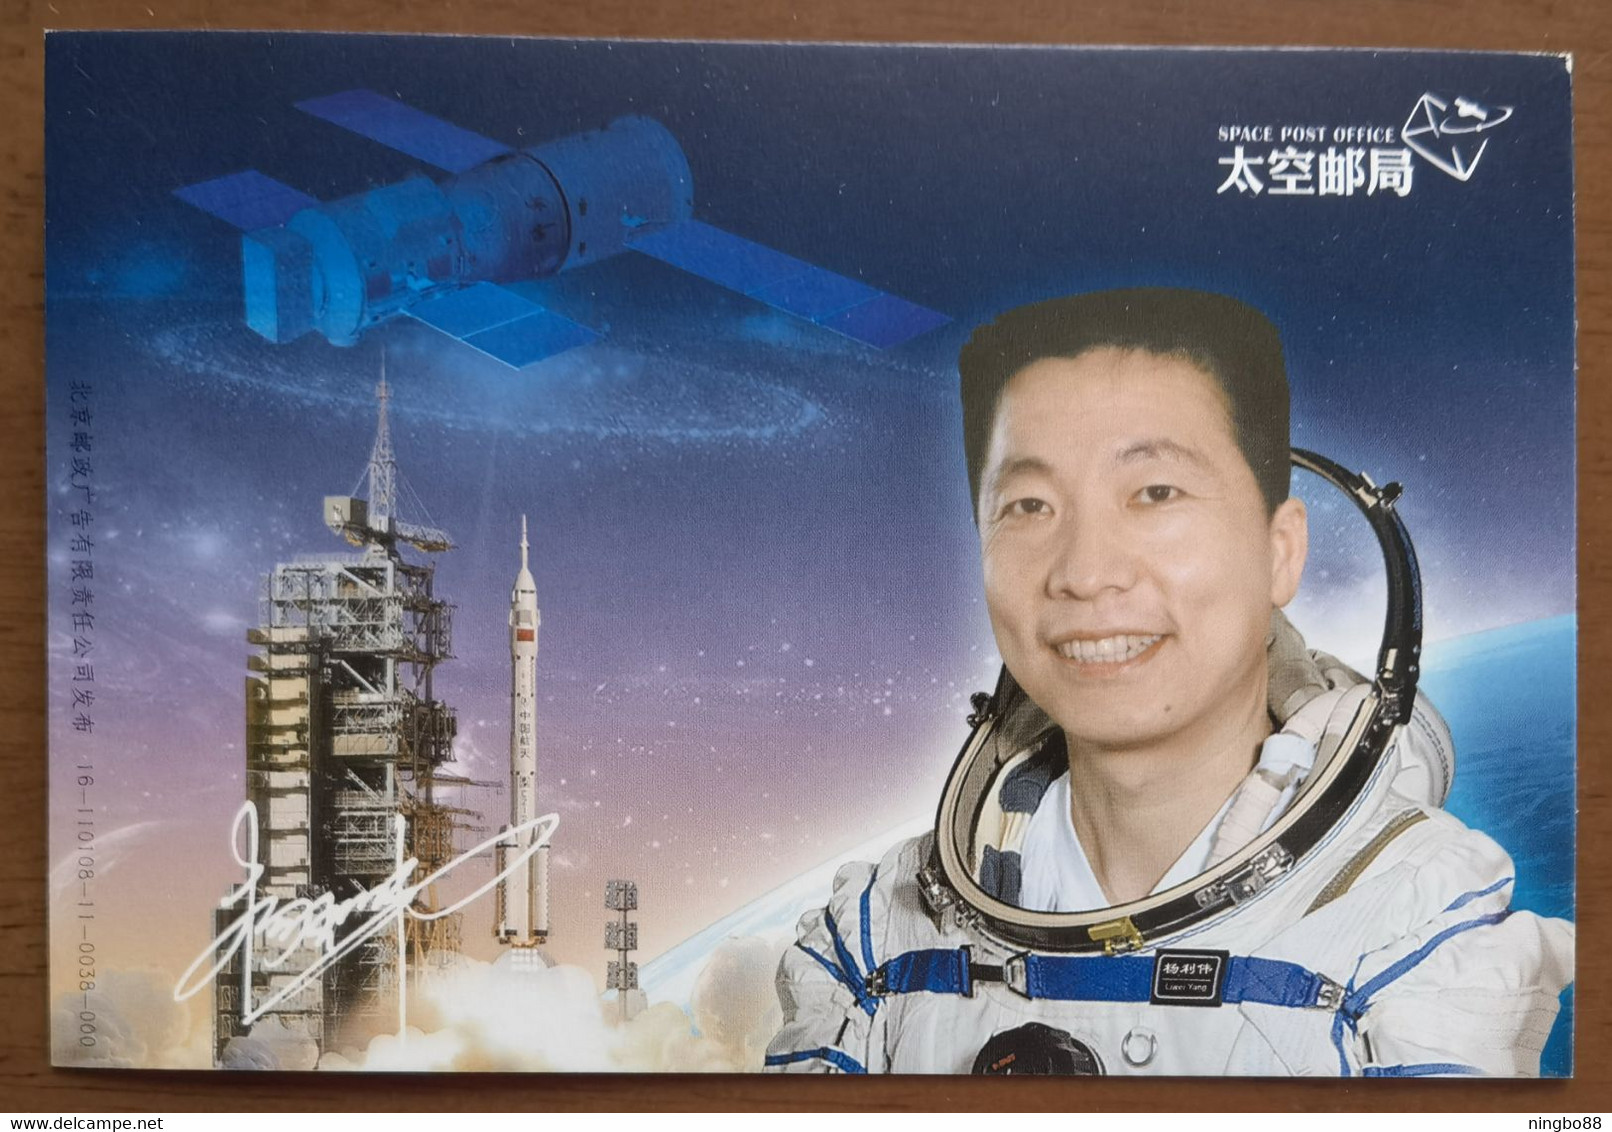 Astronaut Yang Liwei,Shenzhou-5 Chinese First Manned Spacecraft Carrier Rocket Launching,CN 16 Space Post Office PSC - Sammlungen